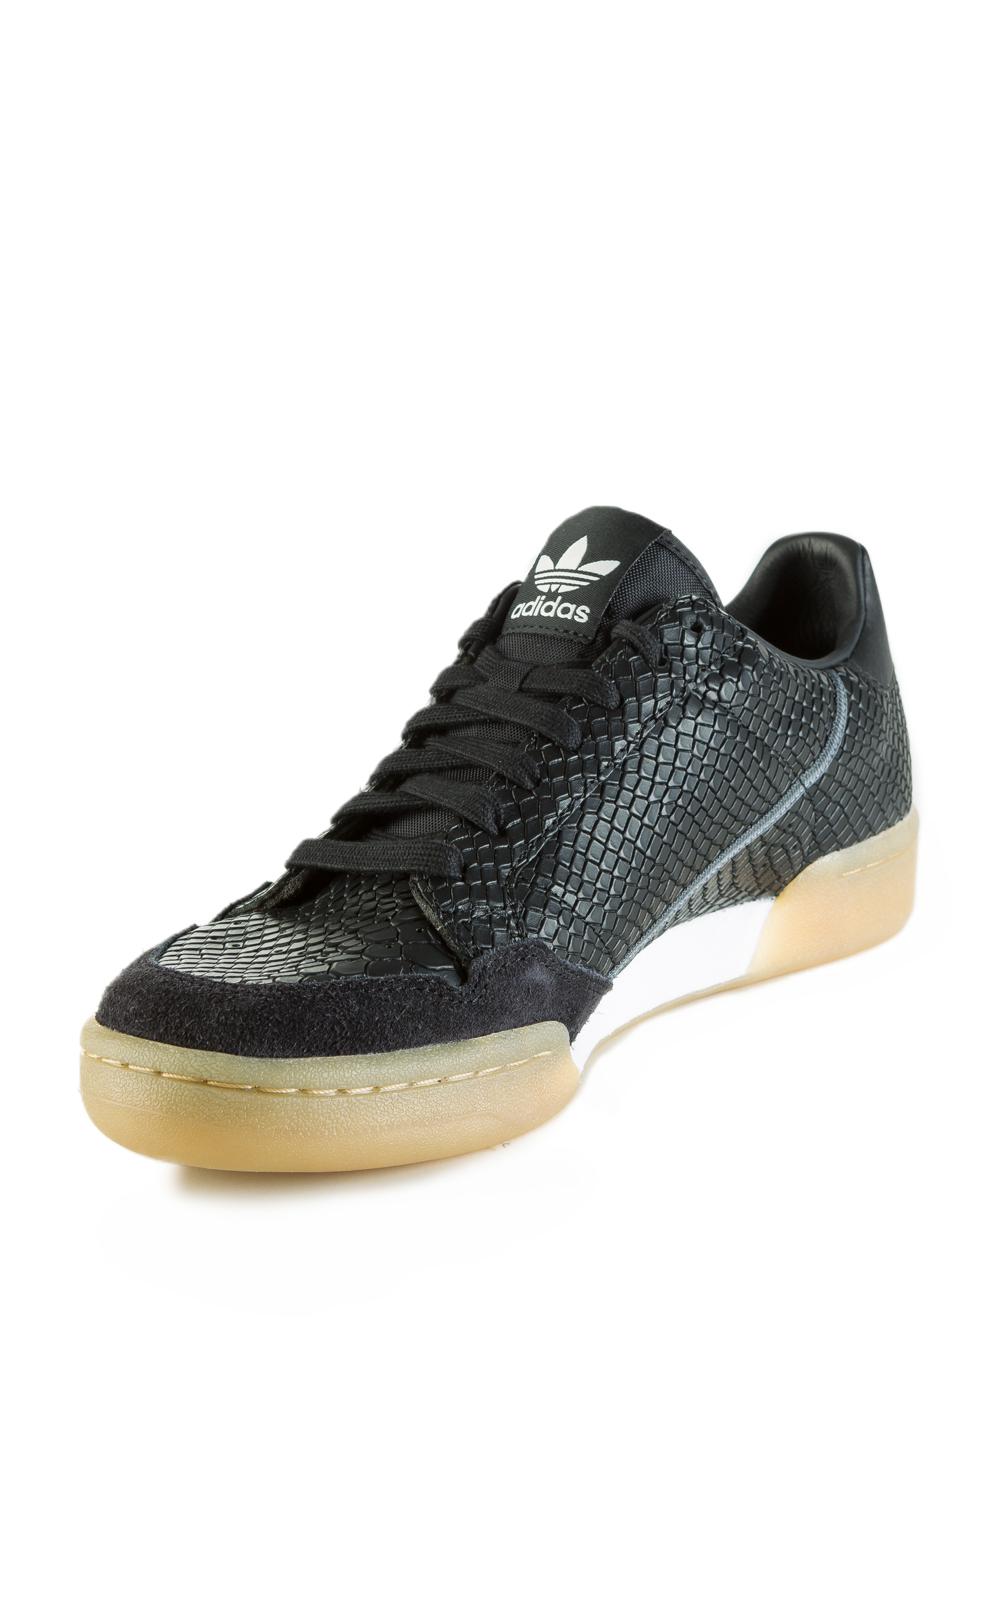 adidas Originals Leather Continental 80 Snakeskin Black for Men - Lyst